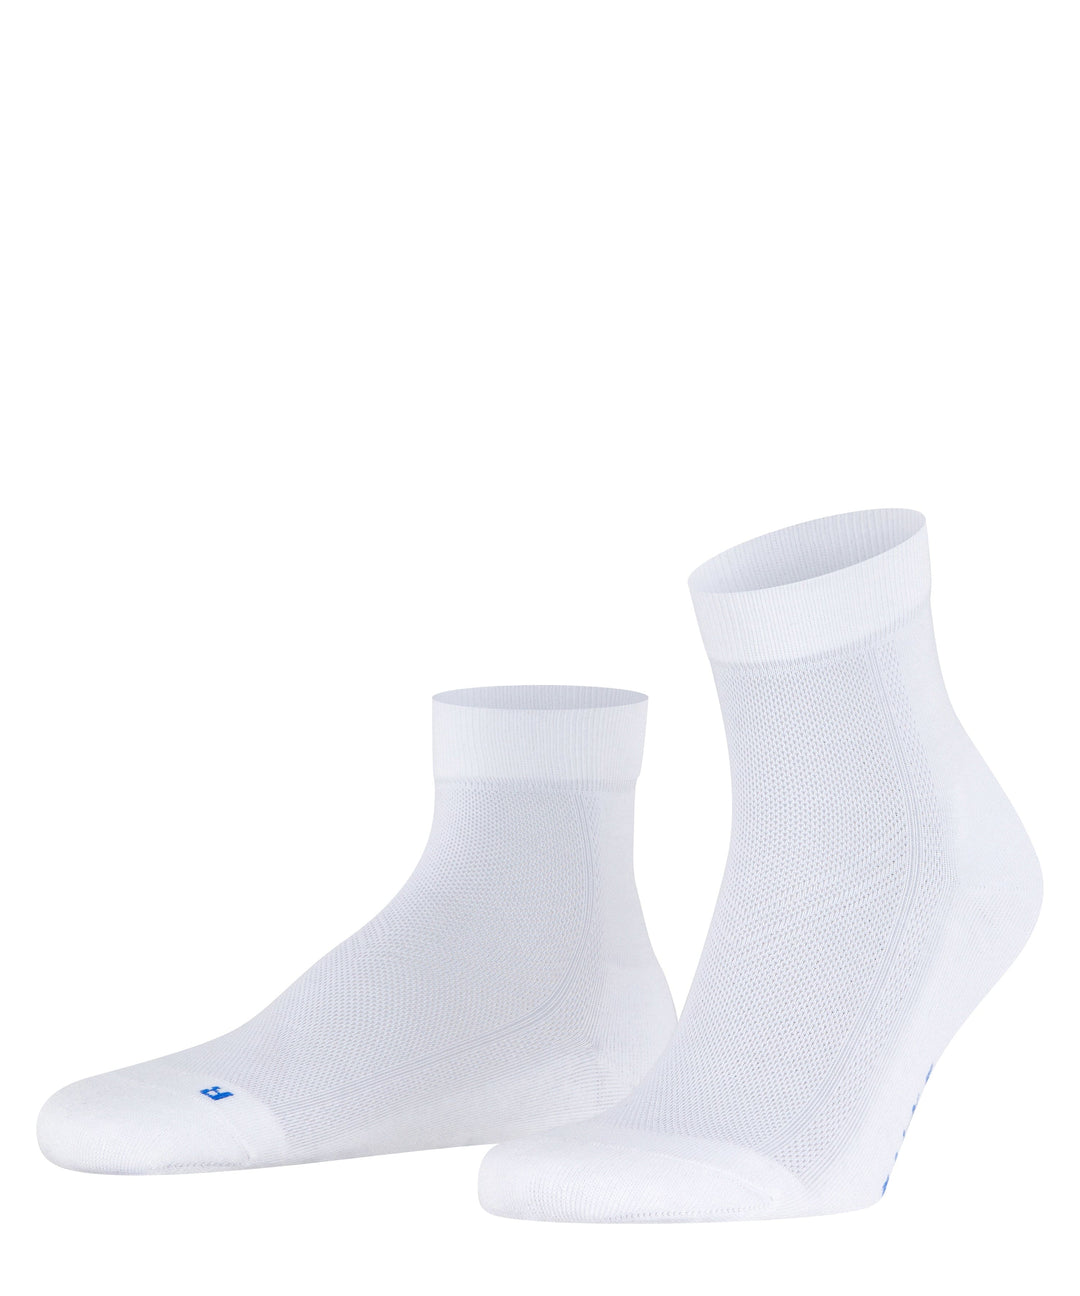 Falke Socks 6.5-9 / White Falke Cool Kick Short